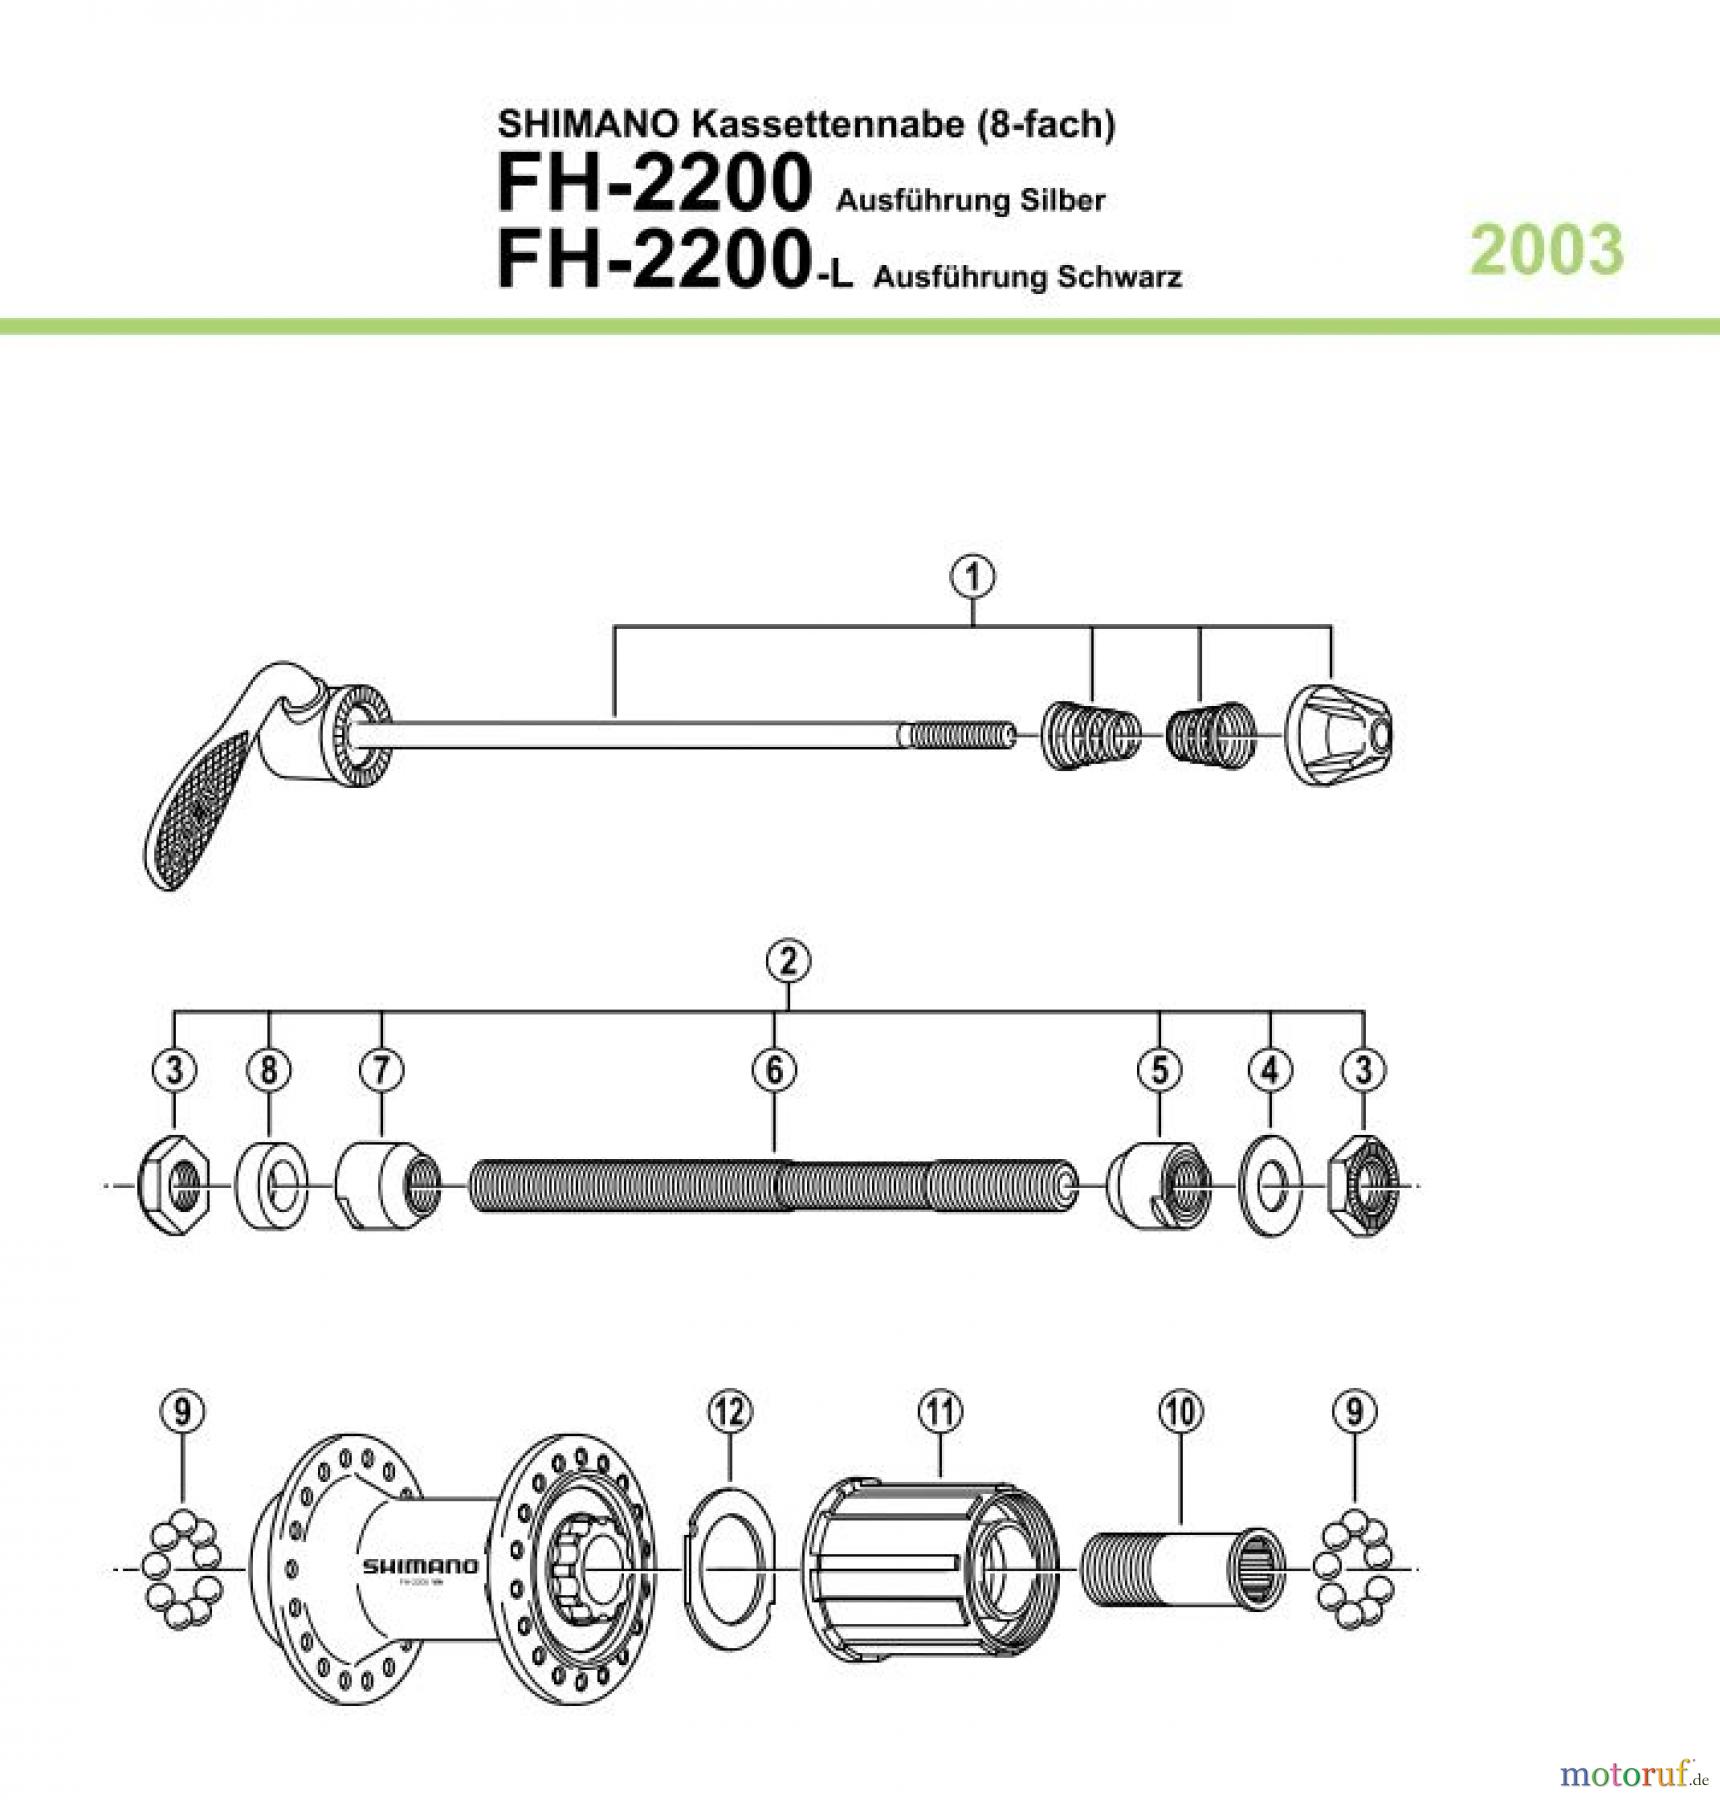  Shimano FH Free Hub - Freilaufnabe FH-2200, 2003 Shimano Kasettennabe (8-fach)